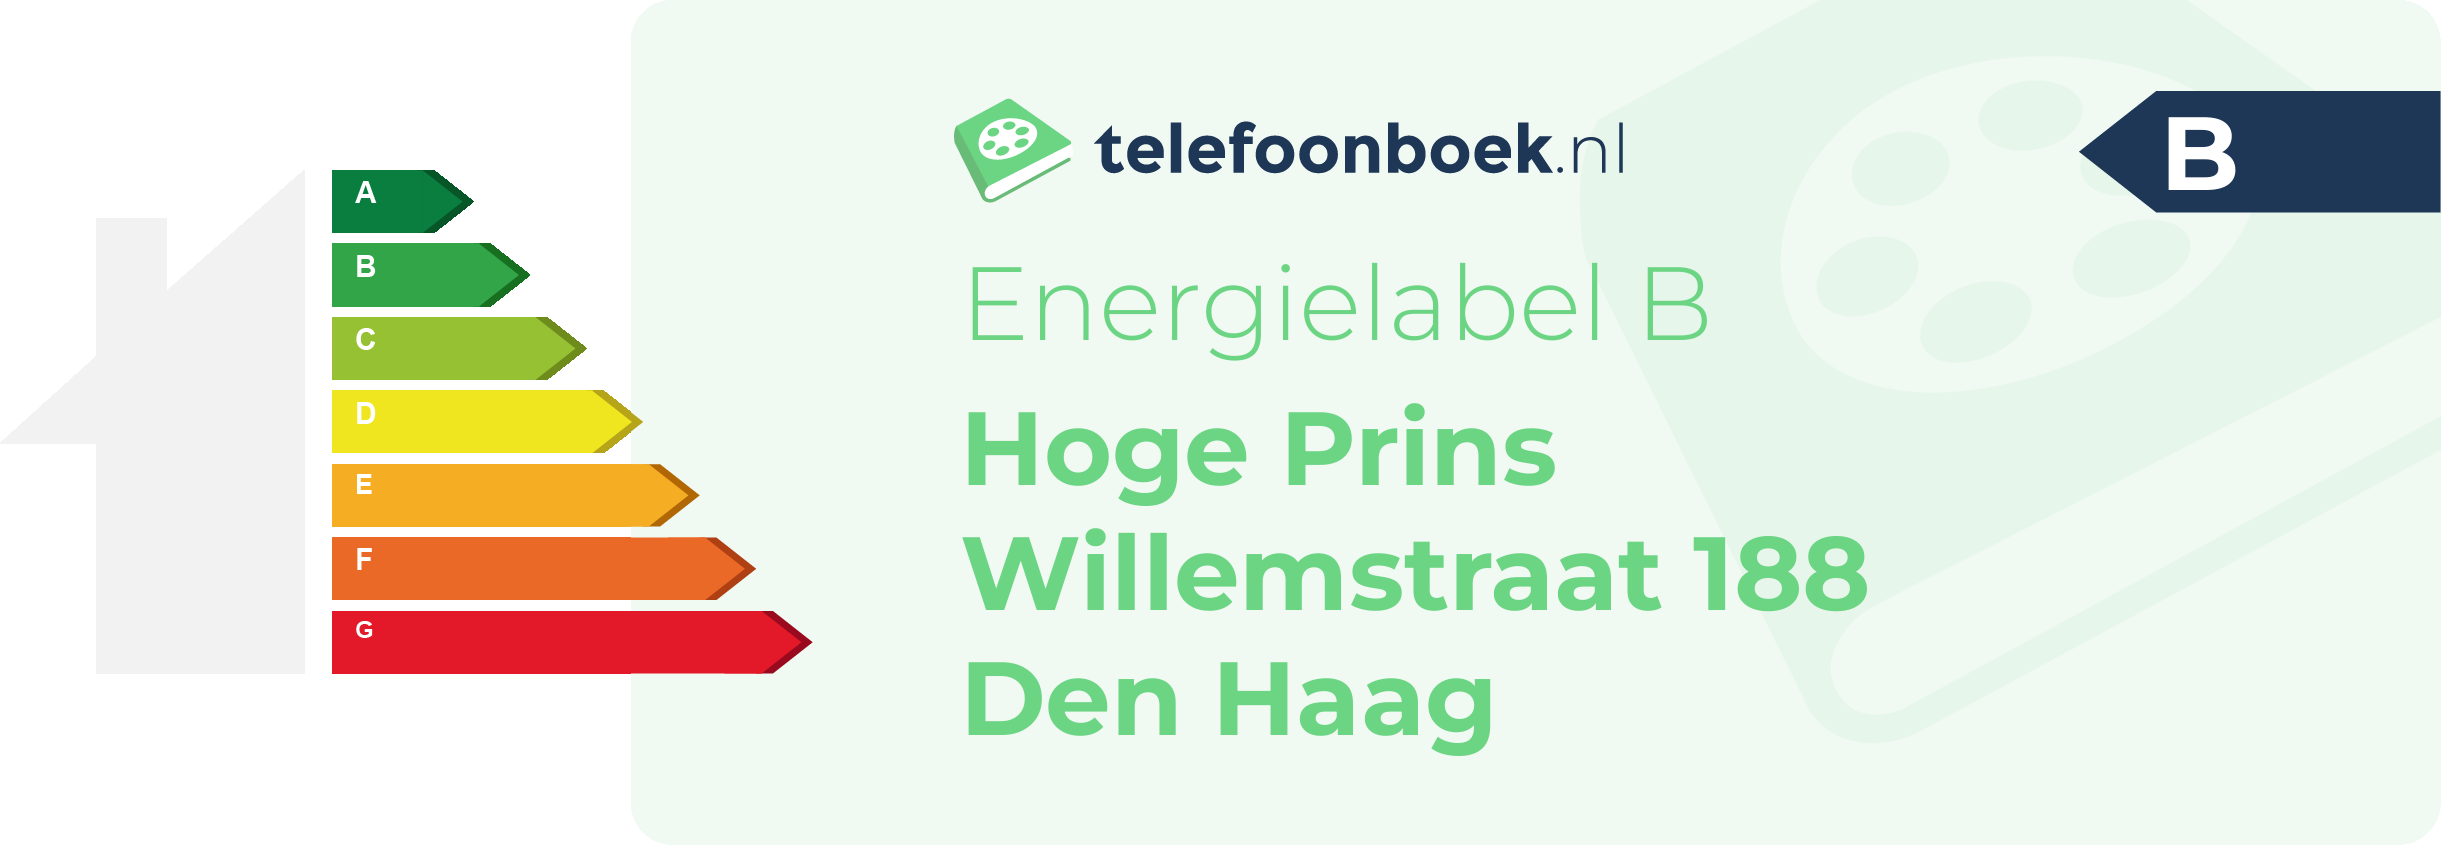 Energielabel Hoge Prins Willemstraat 188 Den Haag